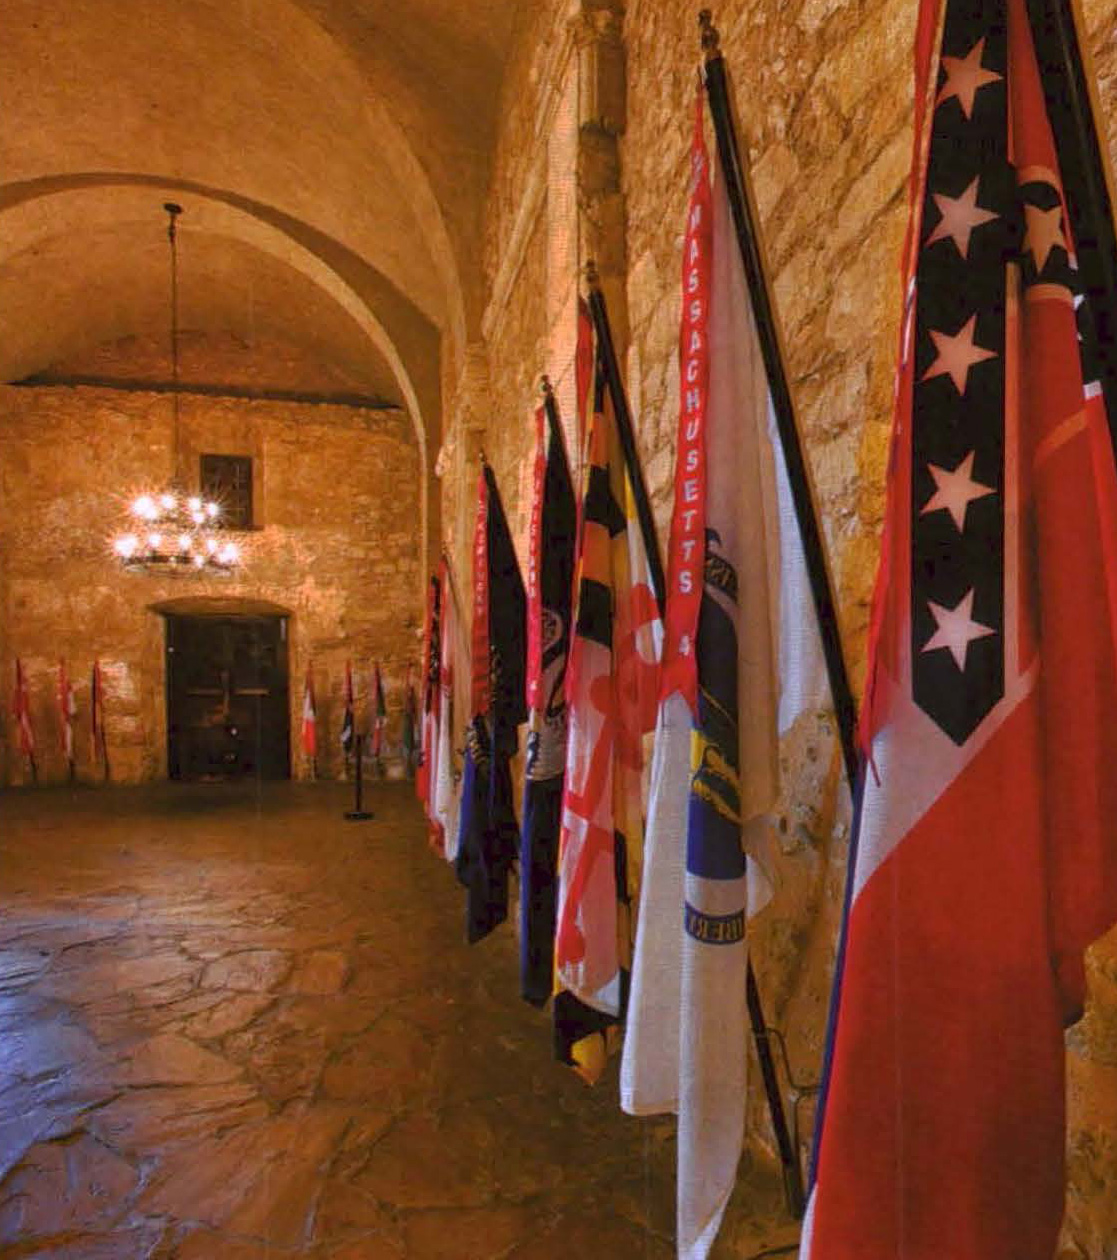 Flags hang along stone walls of a building